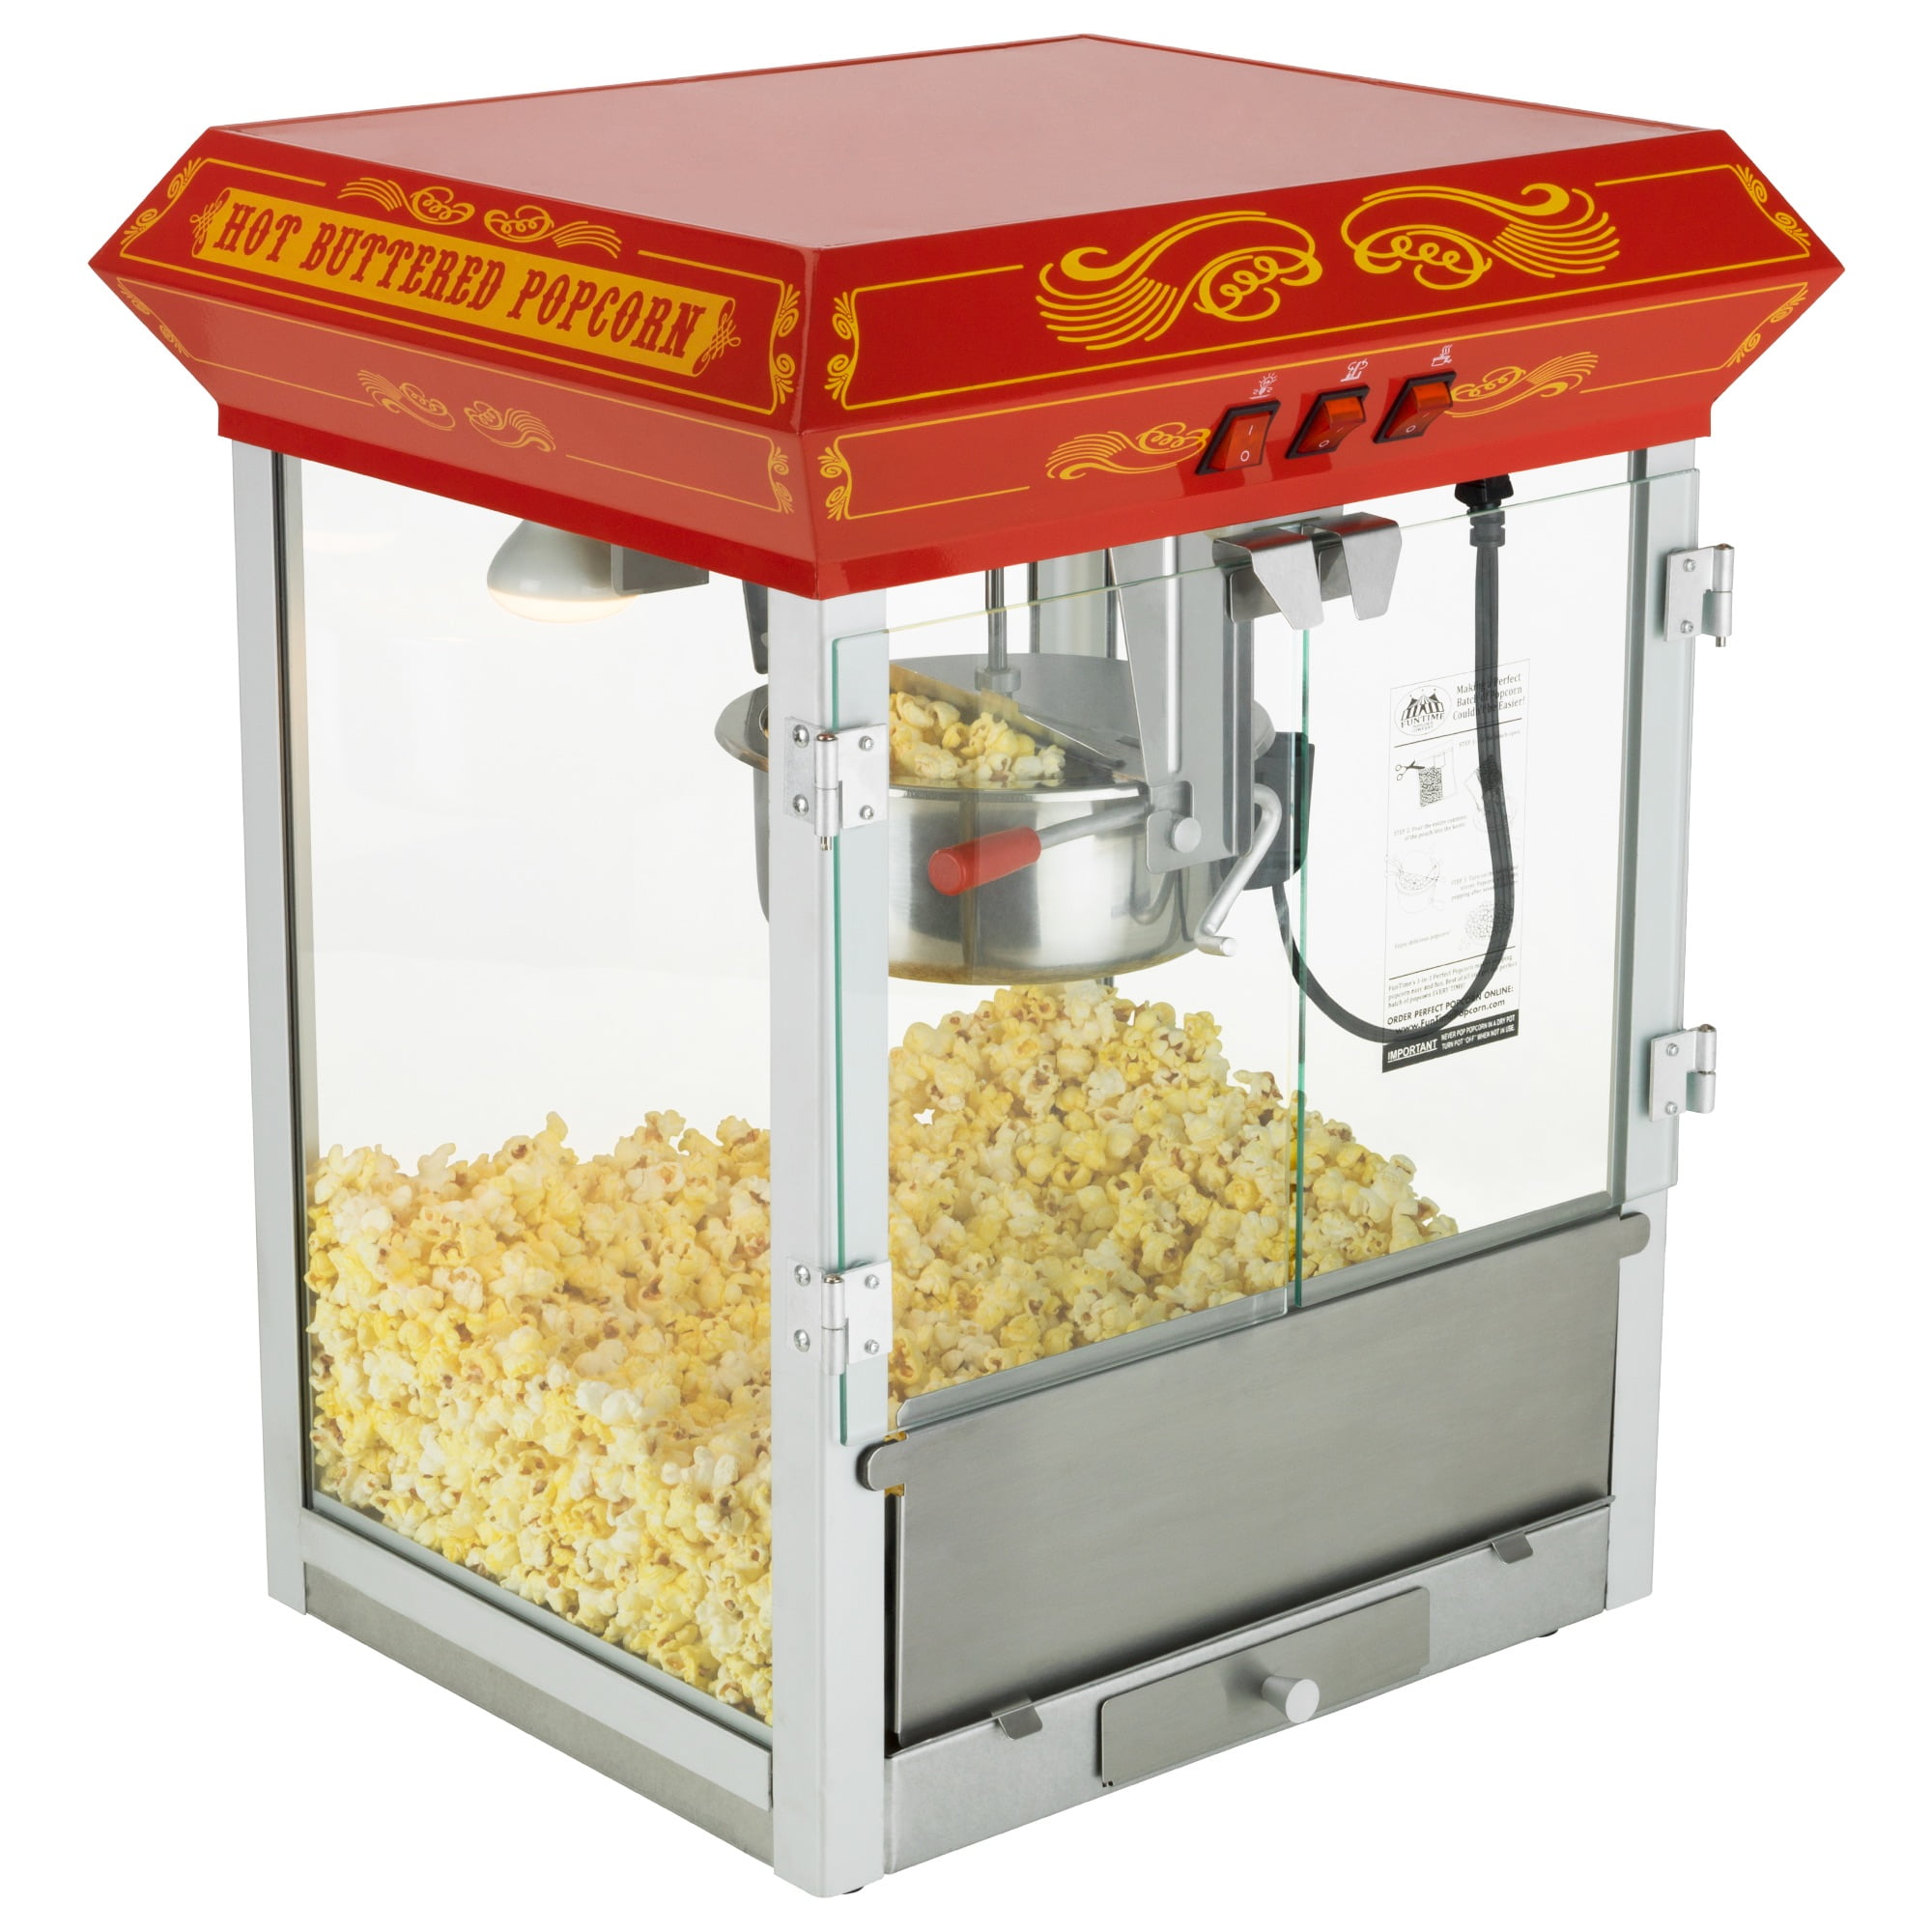 Popcorn Maker, Small Red - Kidsmart Carnivals